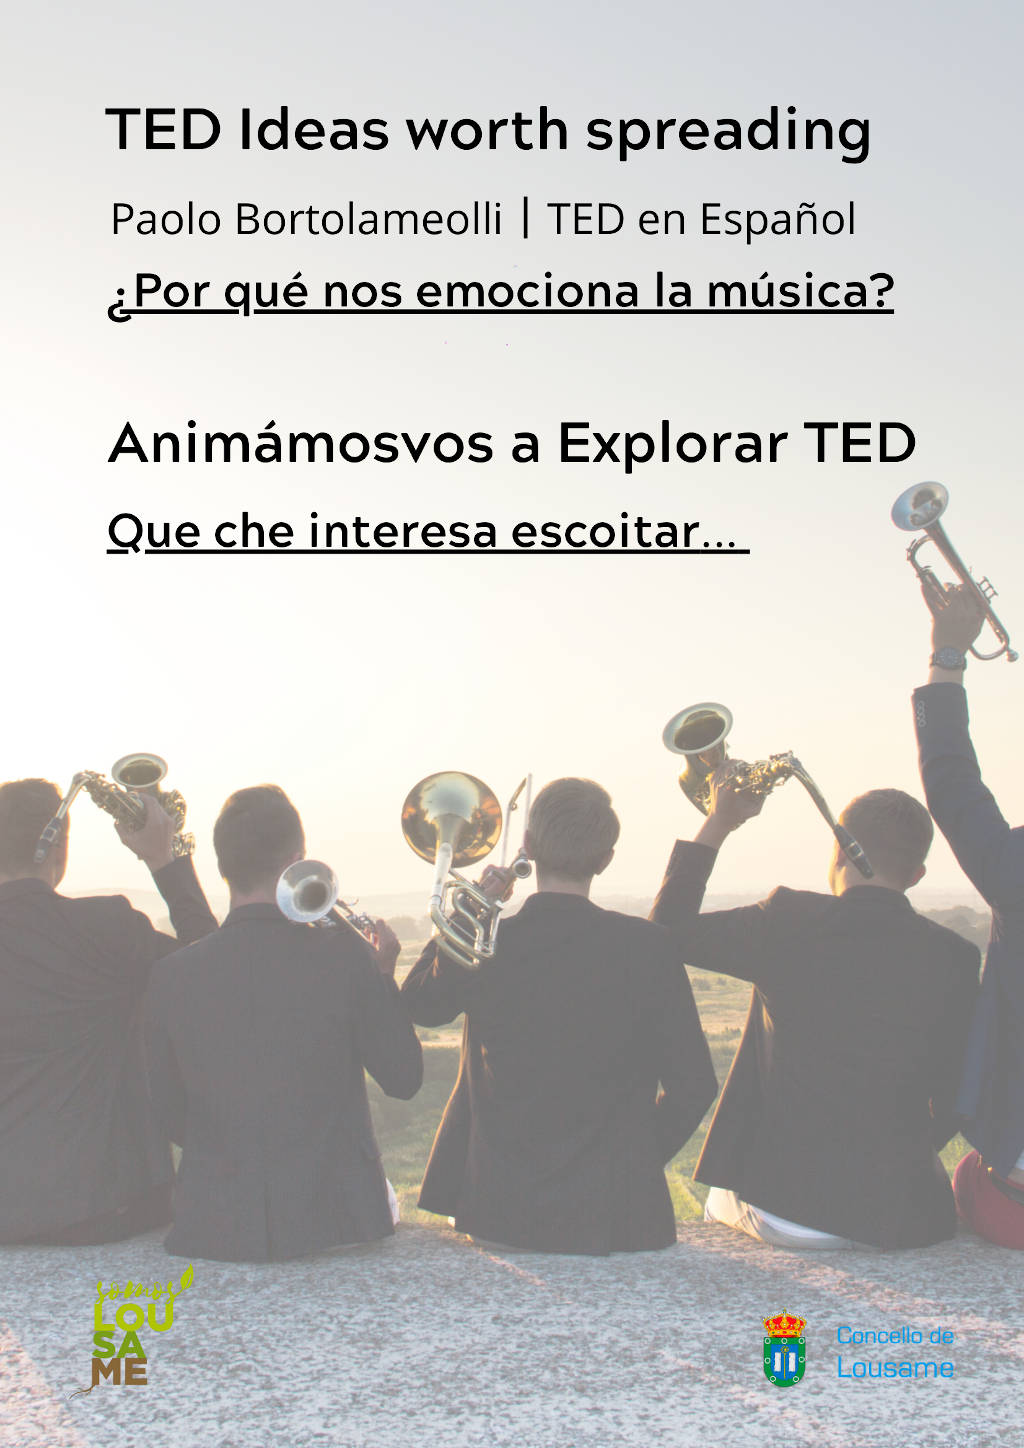 TED Ideas worth spreading